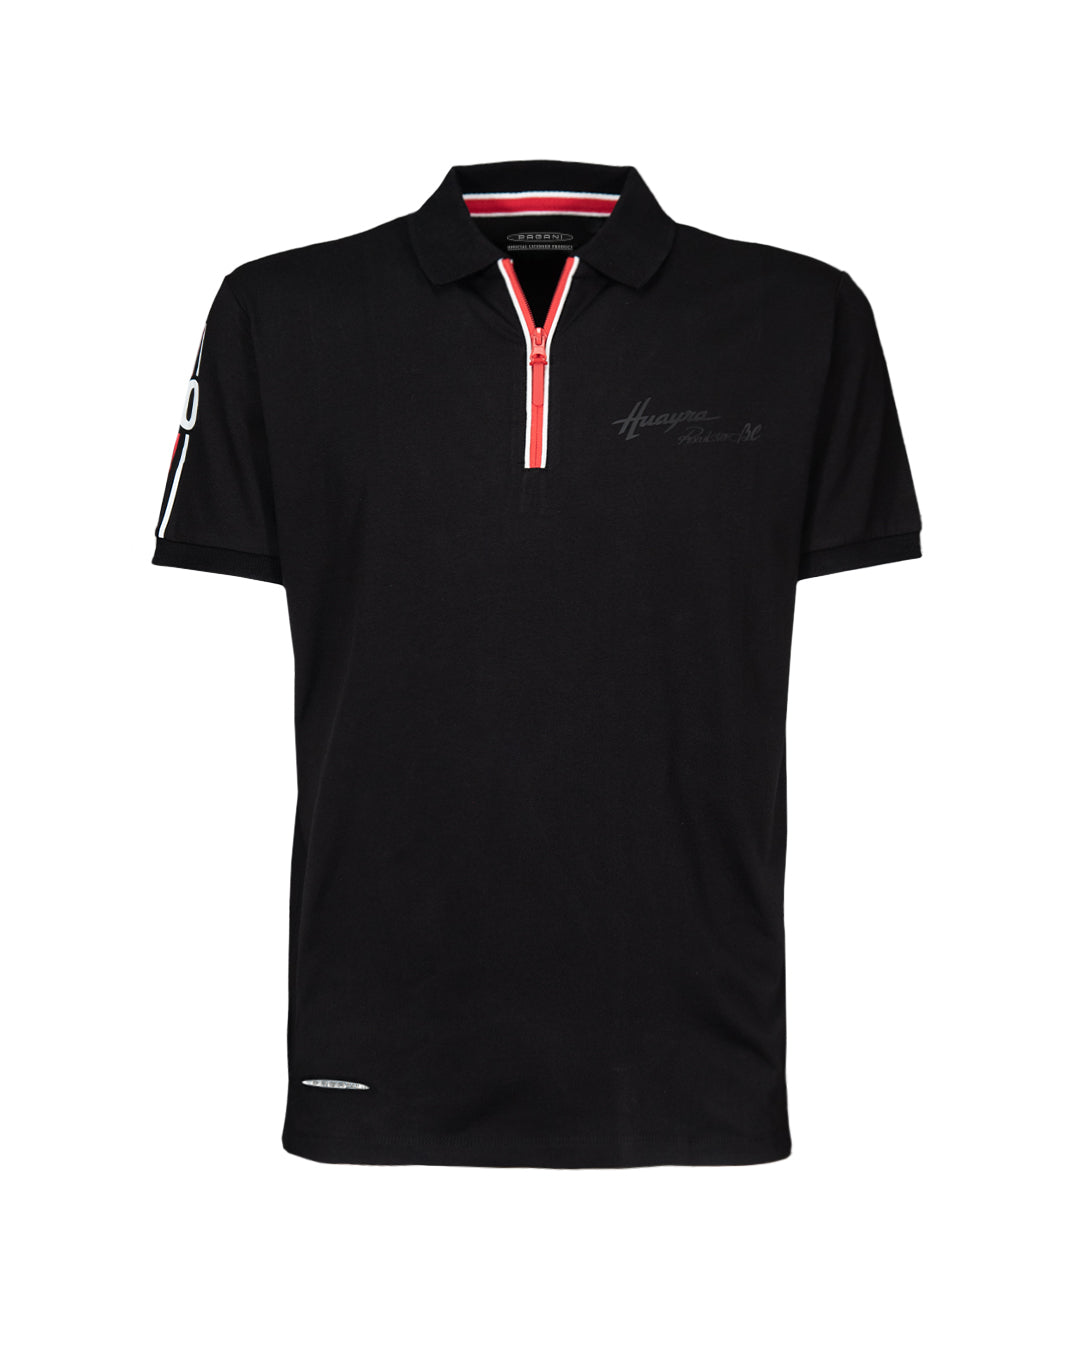 Pagani “Huayra Roadster BC” Stripes 20 Polo Shirt Man Black